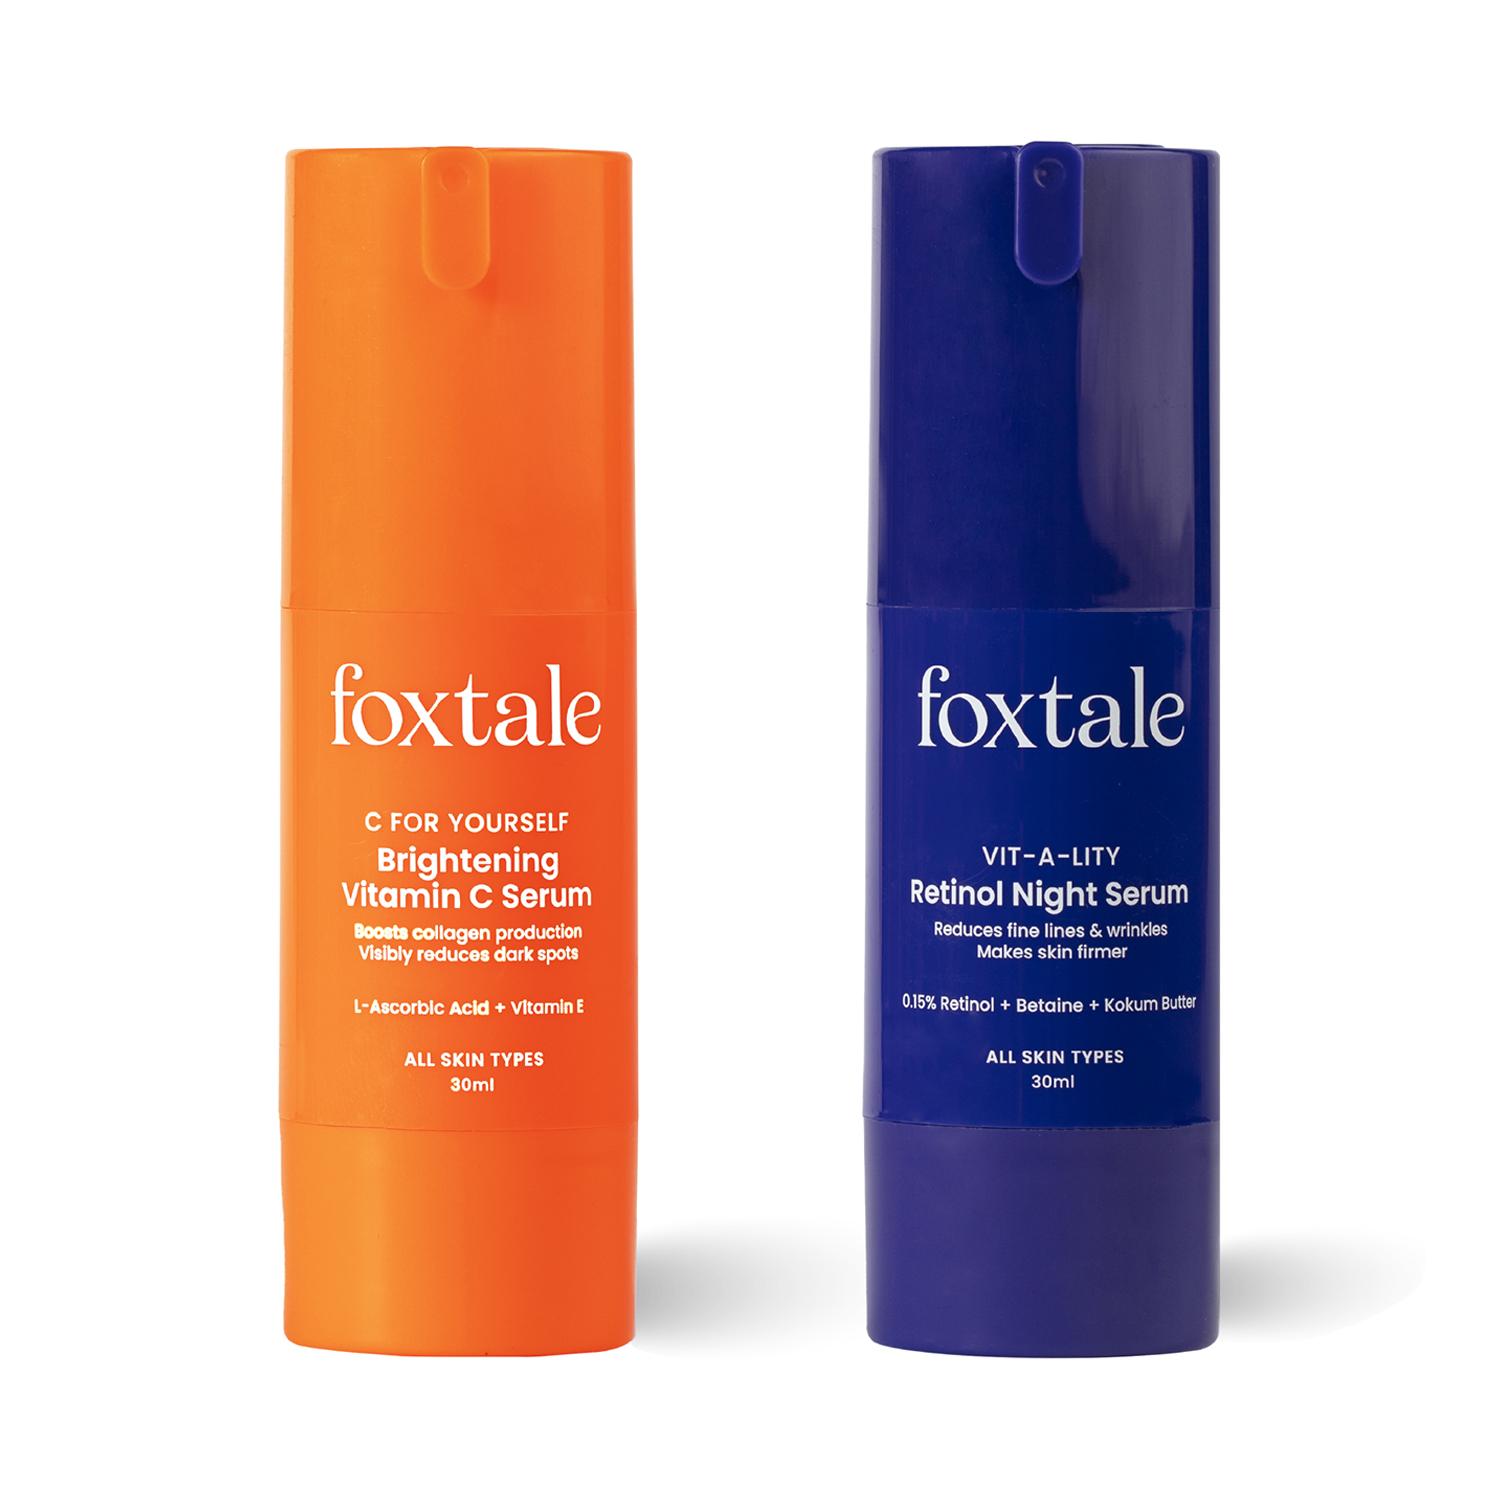 Foxtale | Foxtale 360° Age Protection Skin Care Kit Combo-C For Yourself Vitamin C Serum Retinol Night Serum